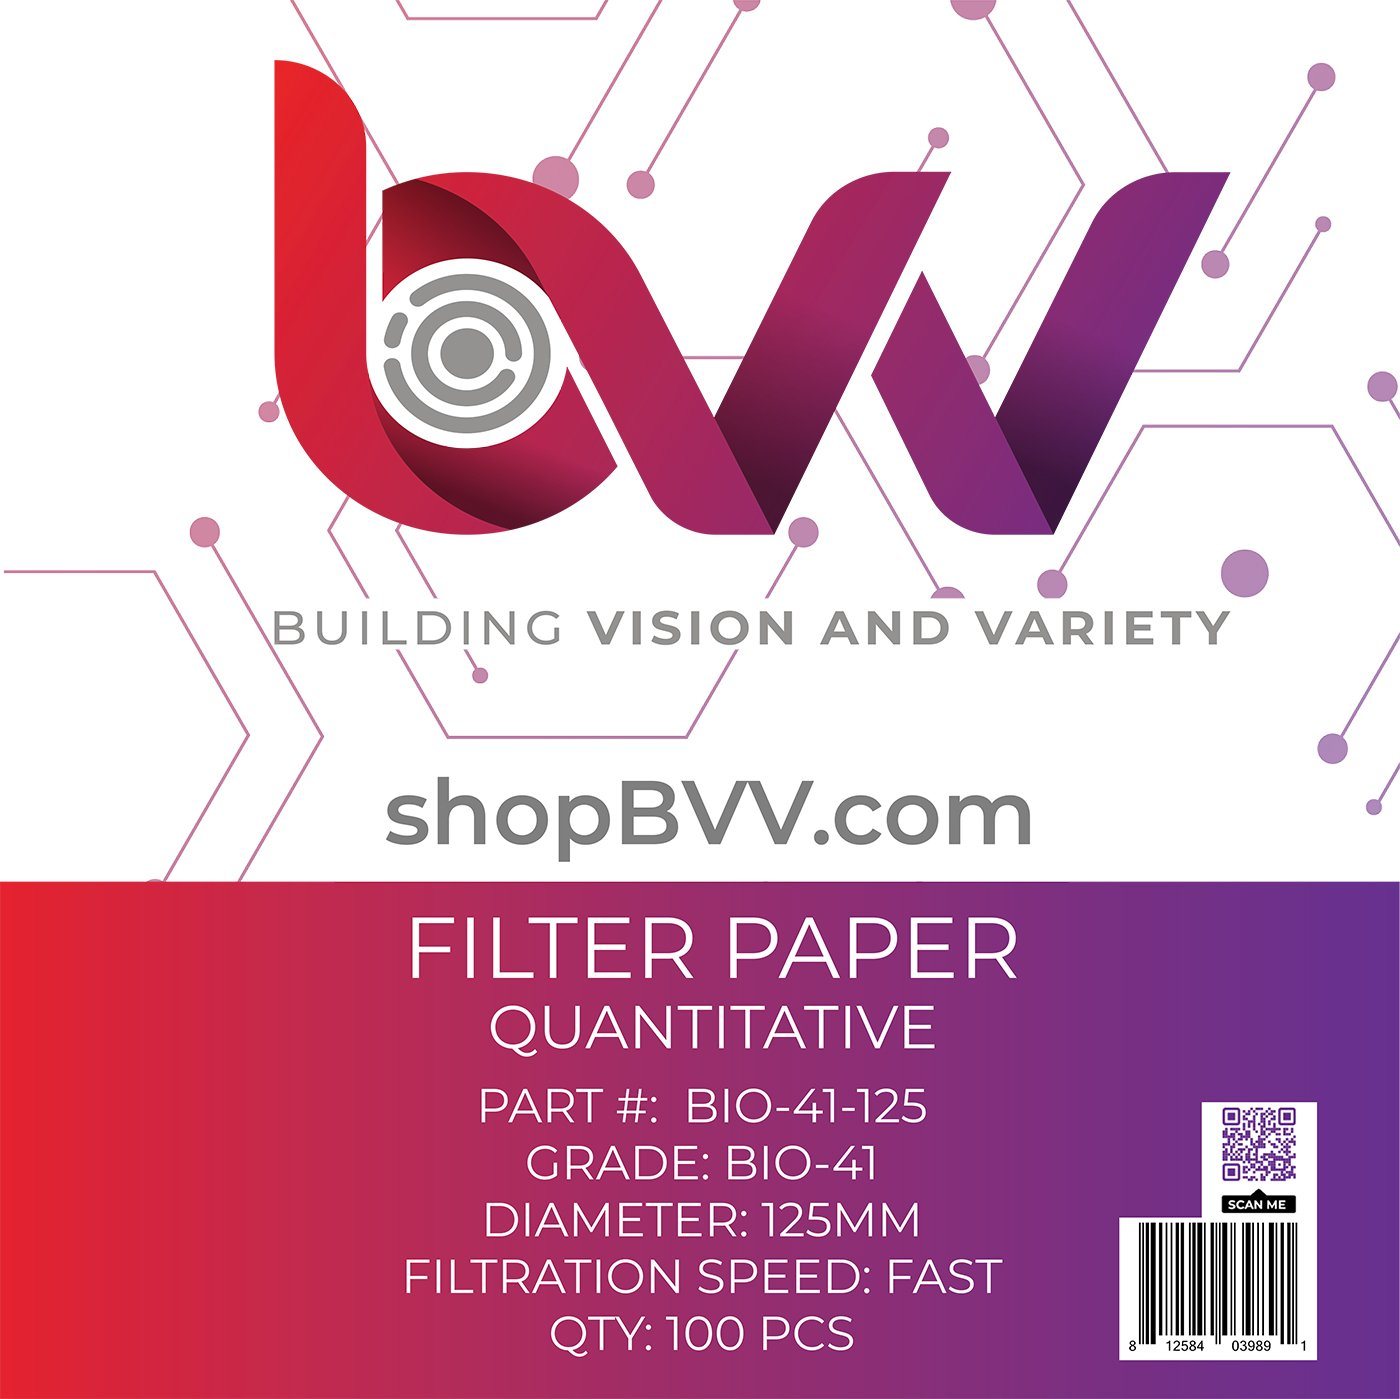 Ashless Filter Papers - 125MM - Quantitative Shop All Categories BVV Grade 41 - Fast - 20-25um 